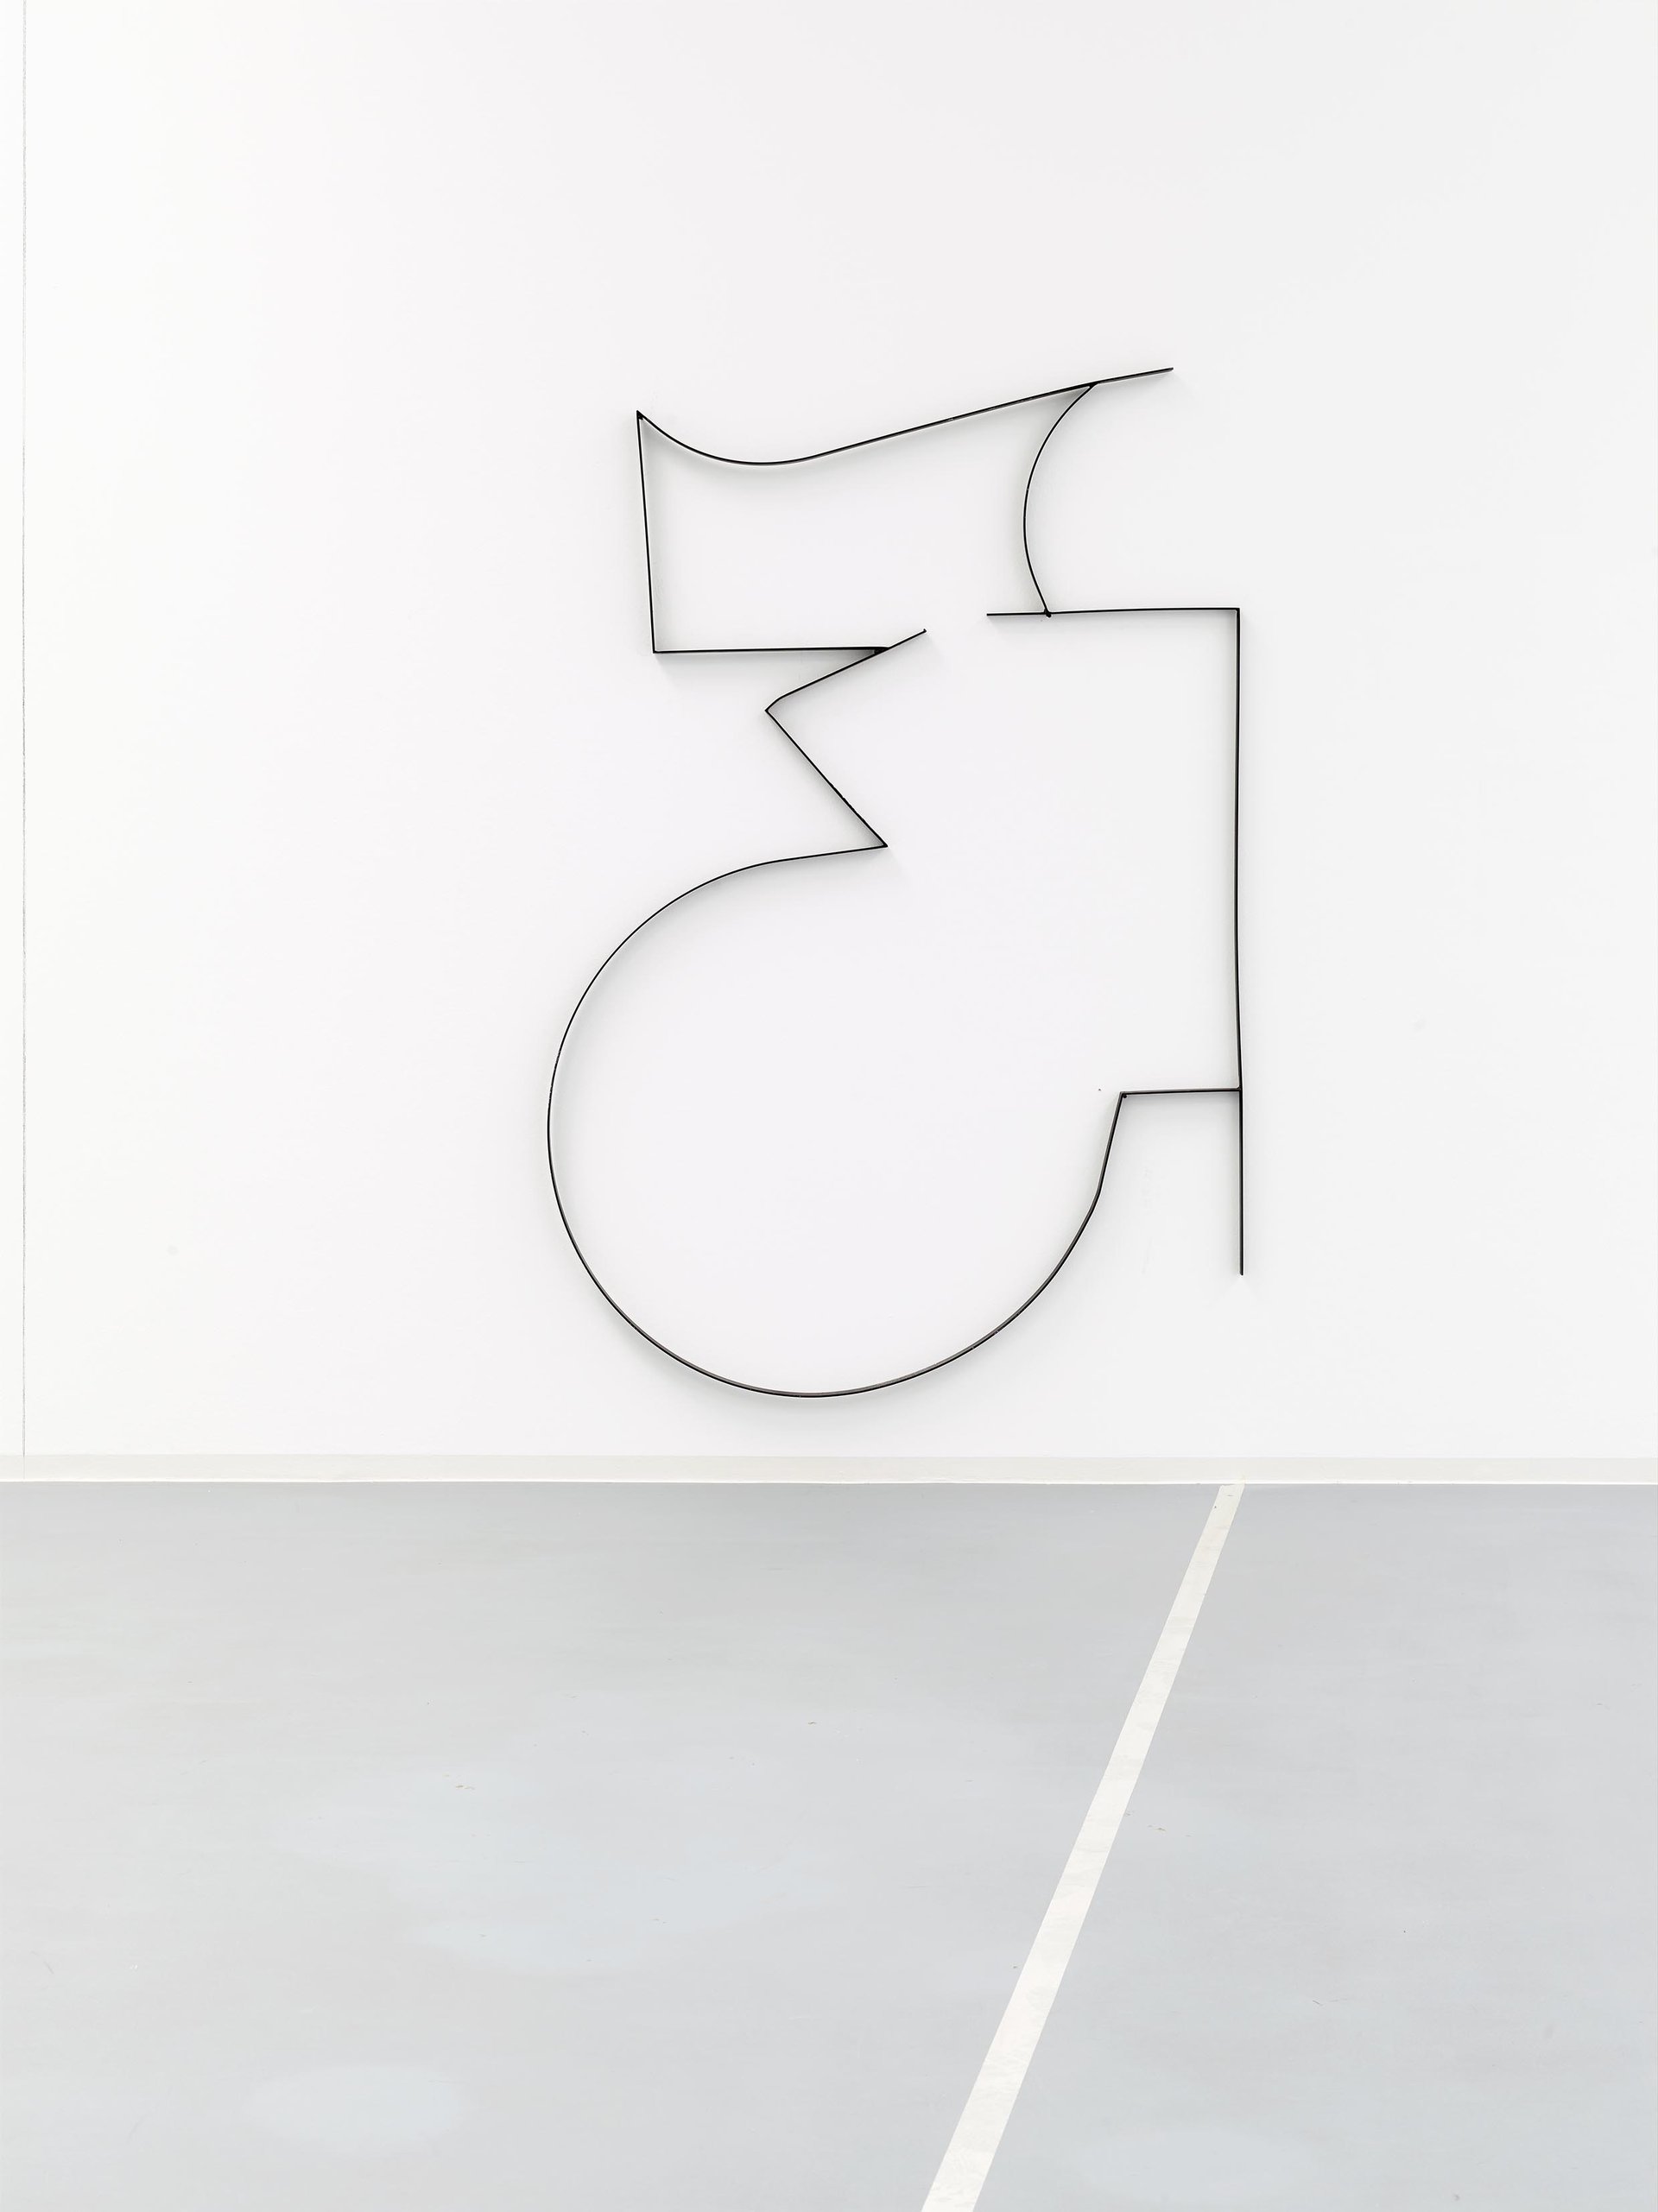 Jonathan Binet, Drawing 4, 2015, installation view, 2015, Bonner Kunstverein, Courtesy of the artist and Gaudel de Stampa, Paris. Photo: Simon Vogel